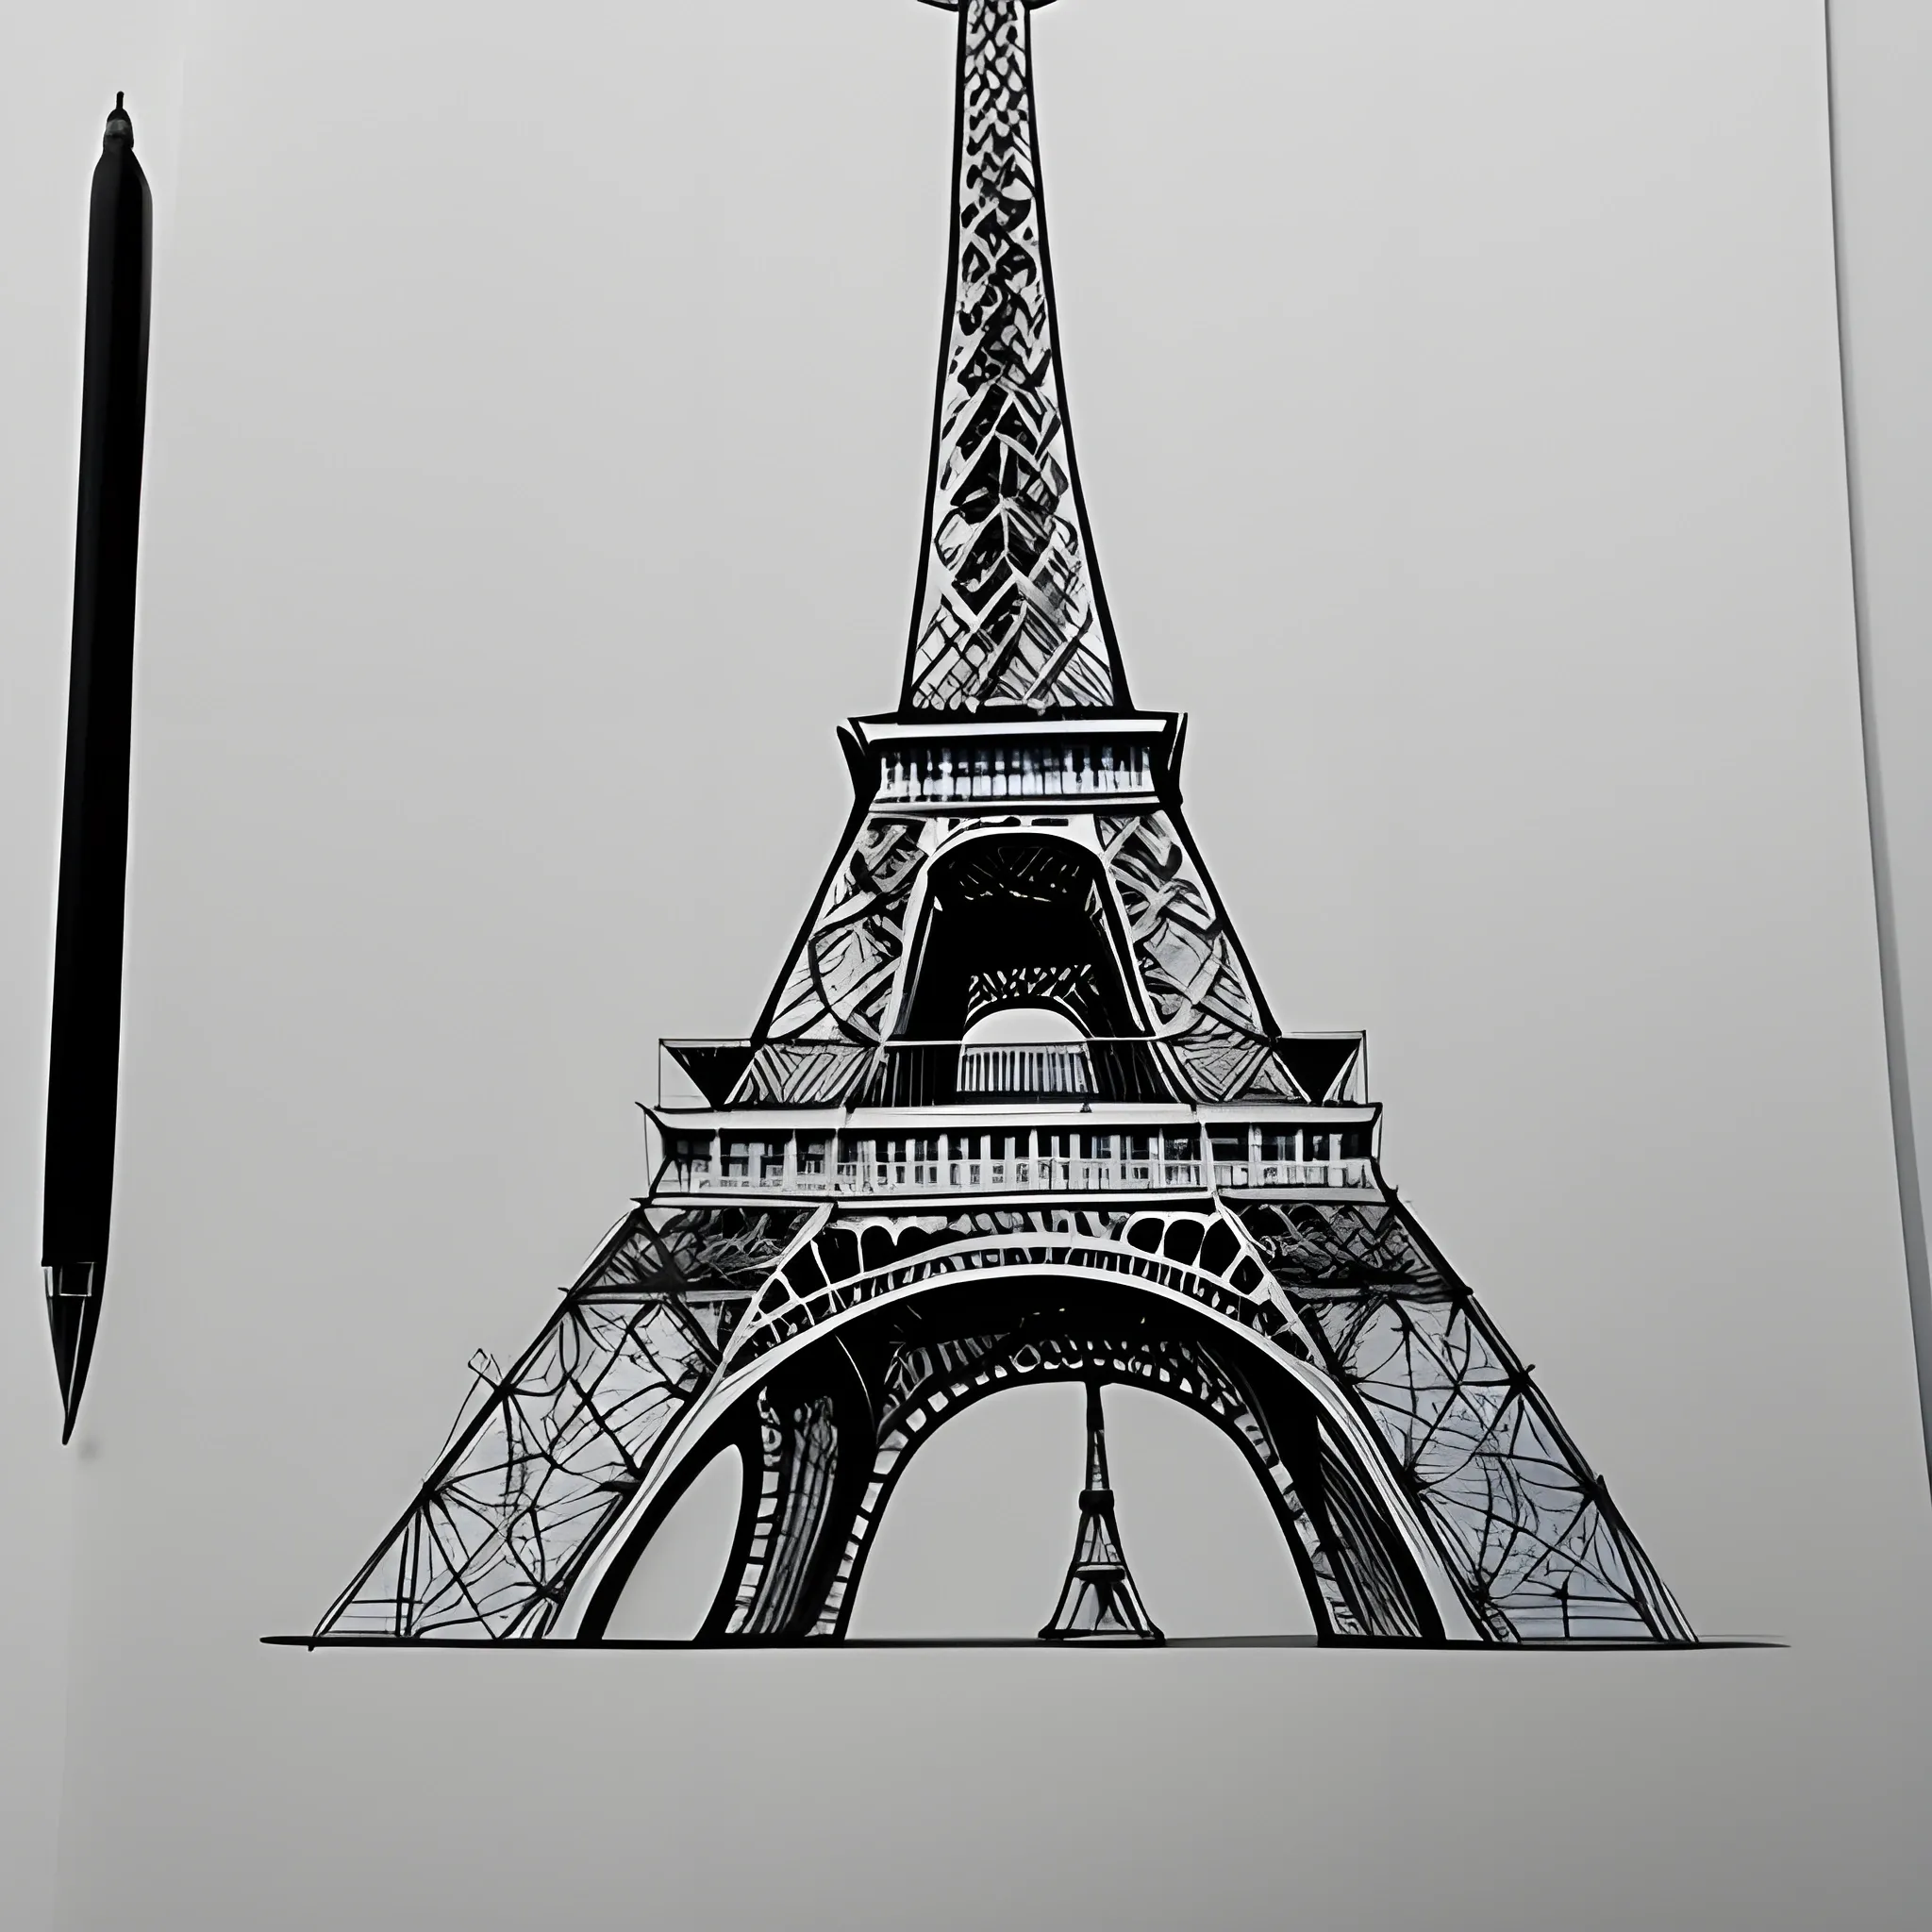 Eiffel Tower Pen technical by mike12345567 on DeviantArt